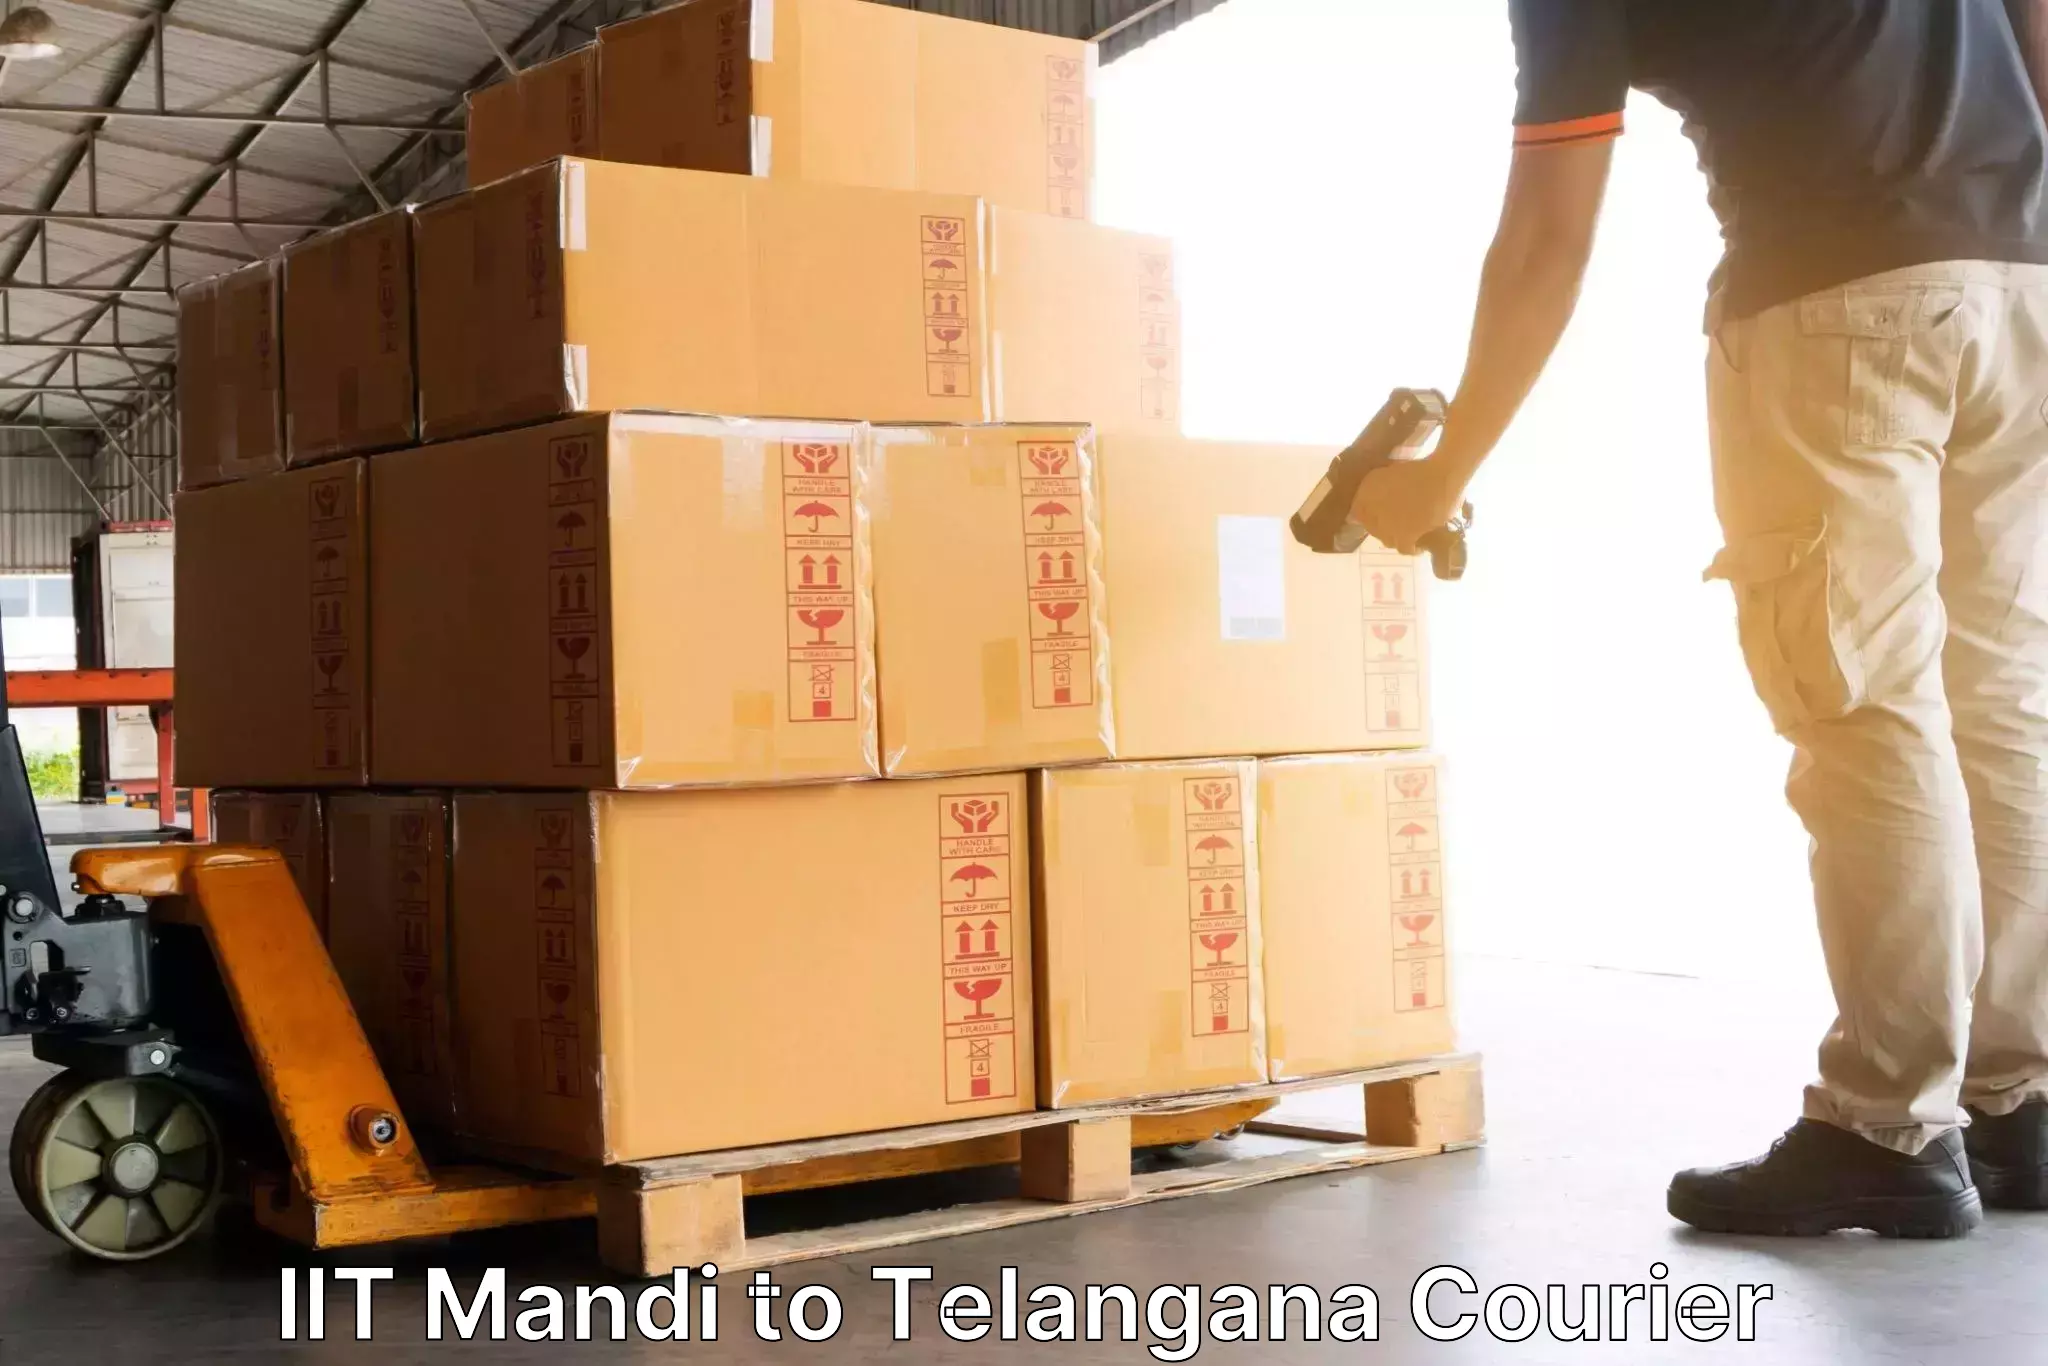 Courier insurance in IIT Mandi to Jammikunta